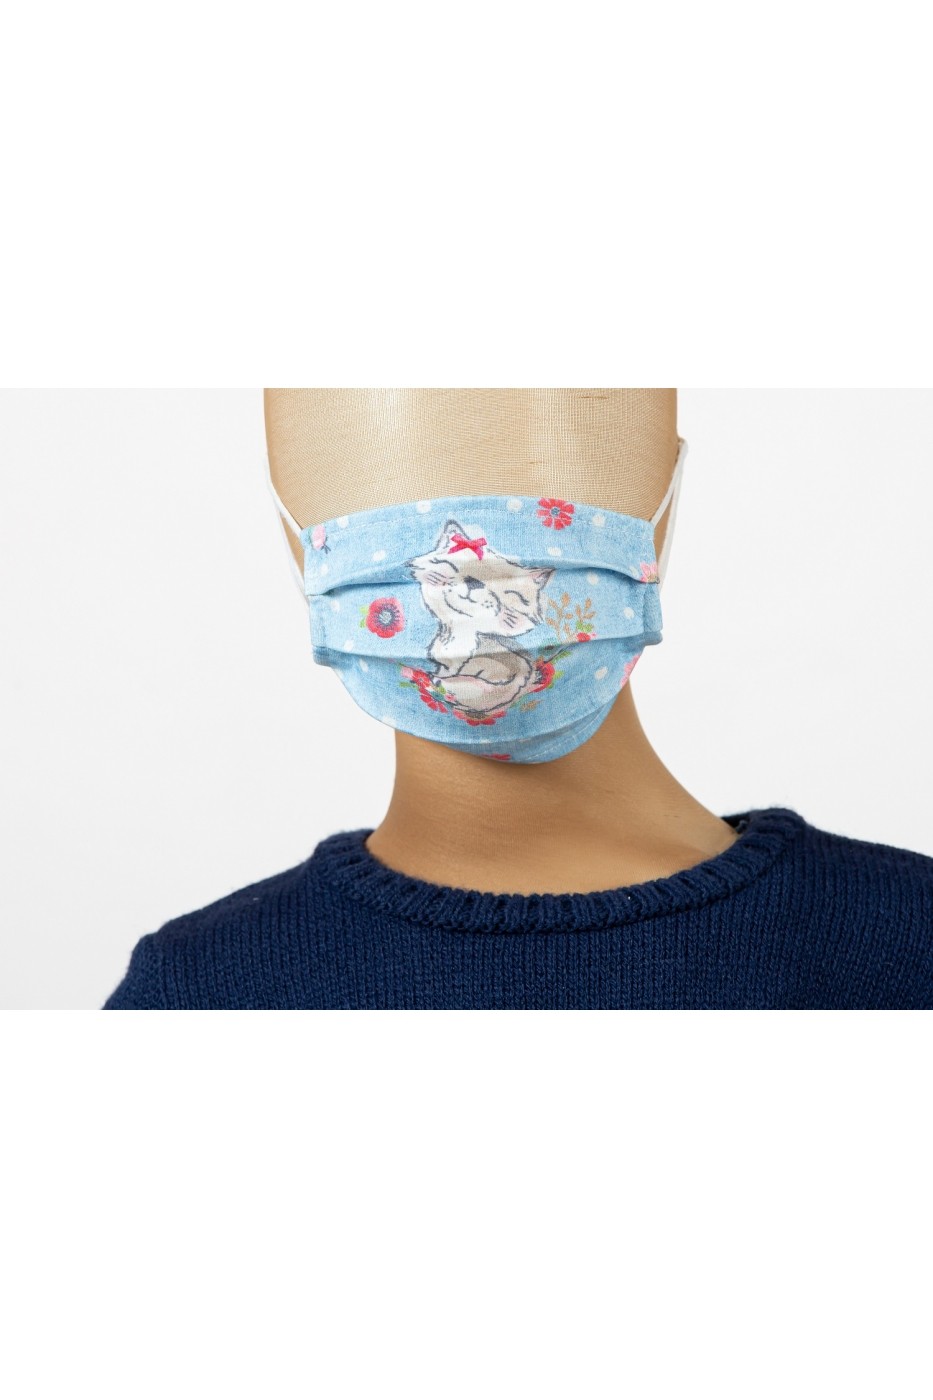 Plague Manufacturer Suffix Masca de protectie pentru copii, model piscica Be You - FashionUP!